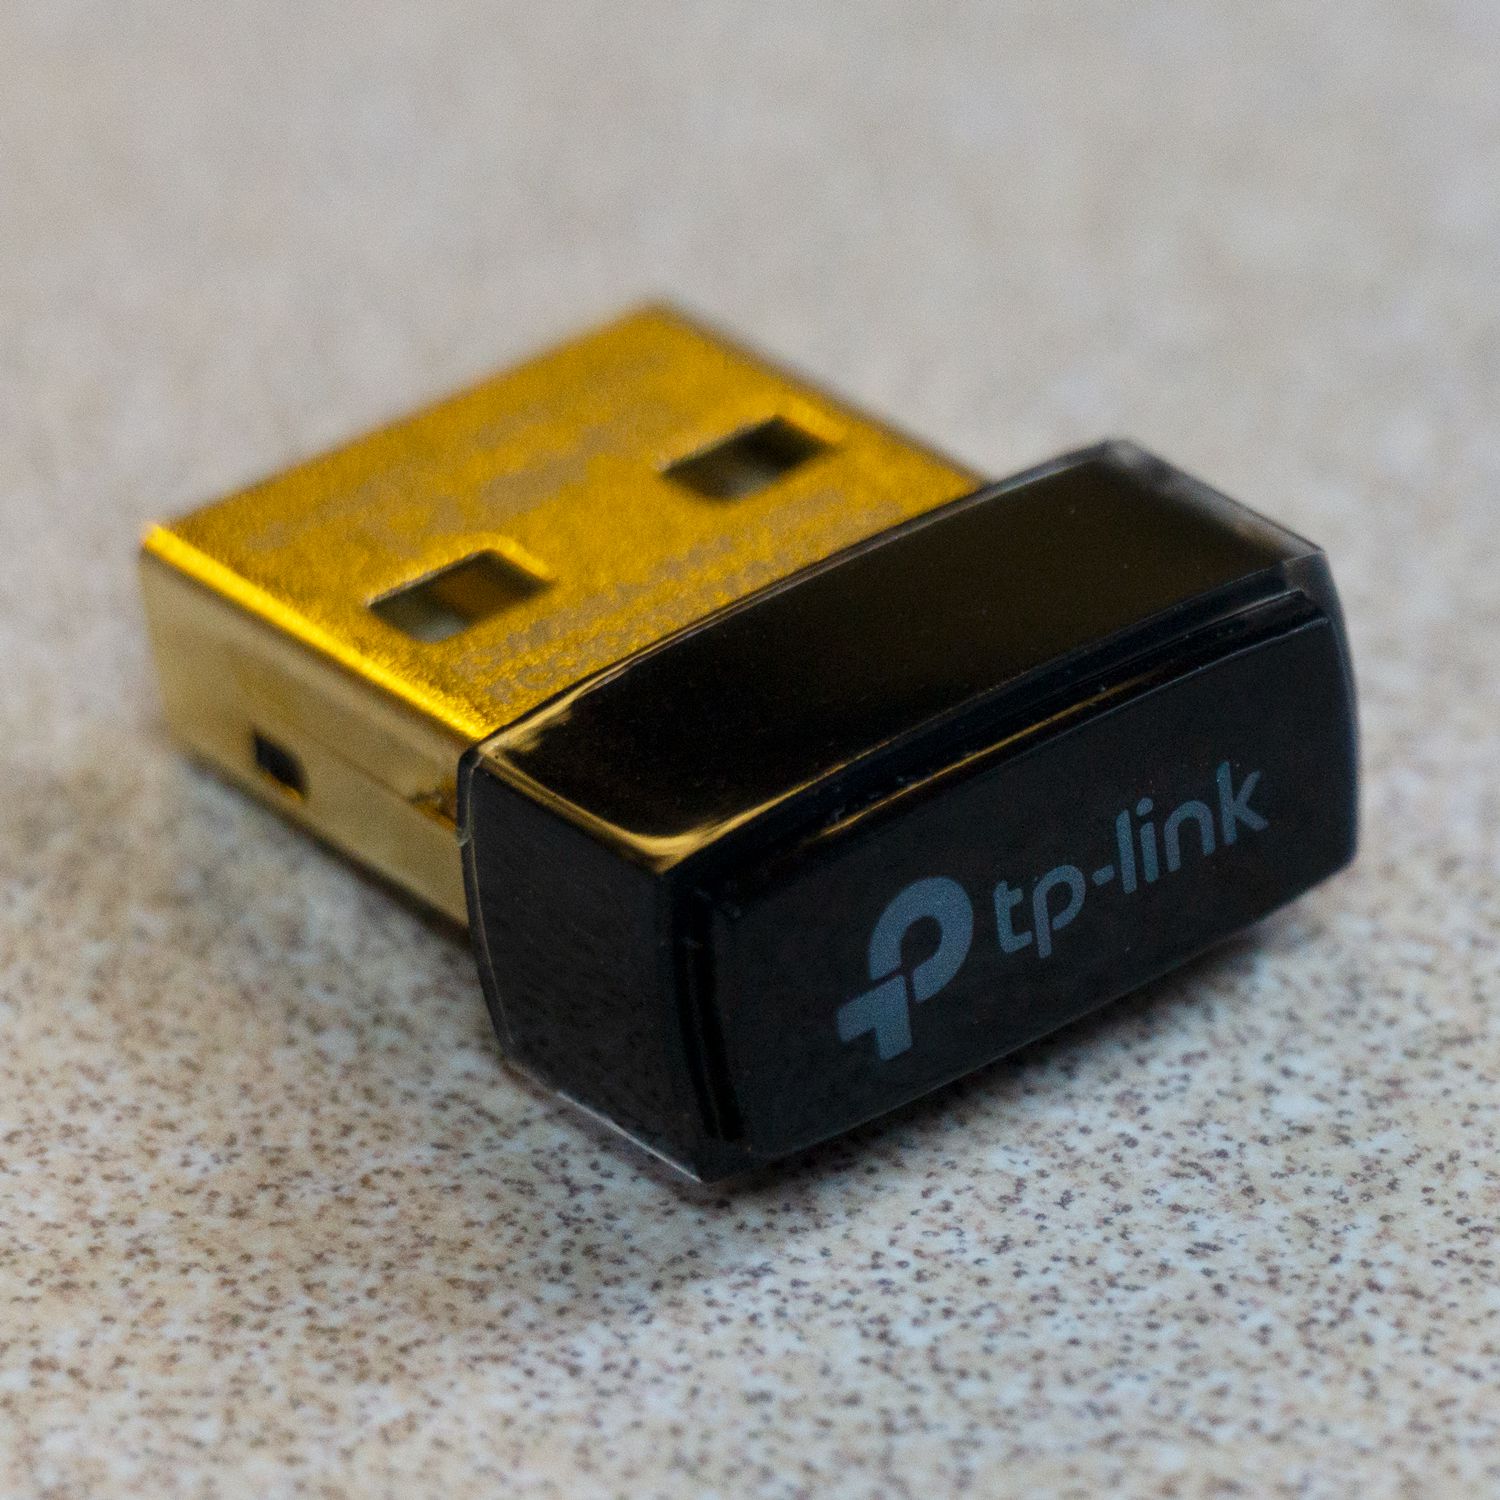 TPlink WIFI USB Adaptor HeroSquare 38e01b8b979e4ce6b43797e9de895aaa